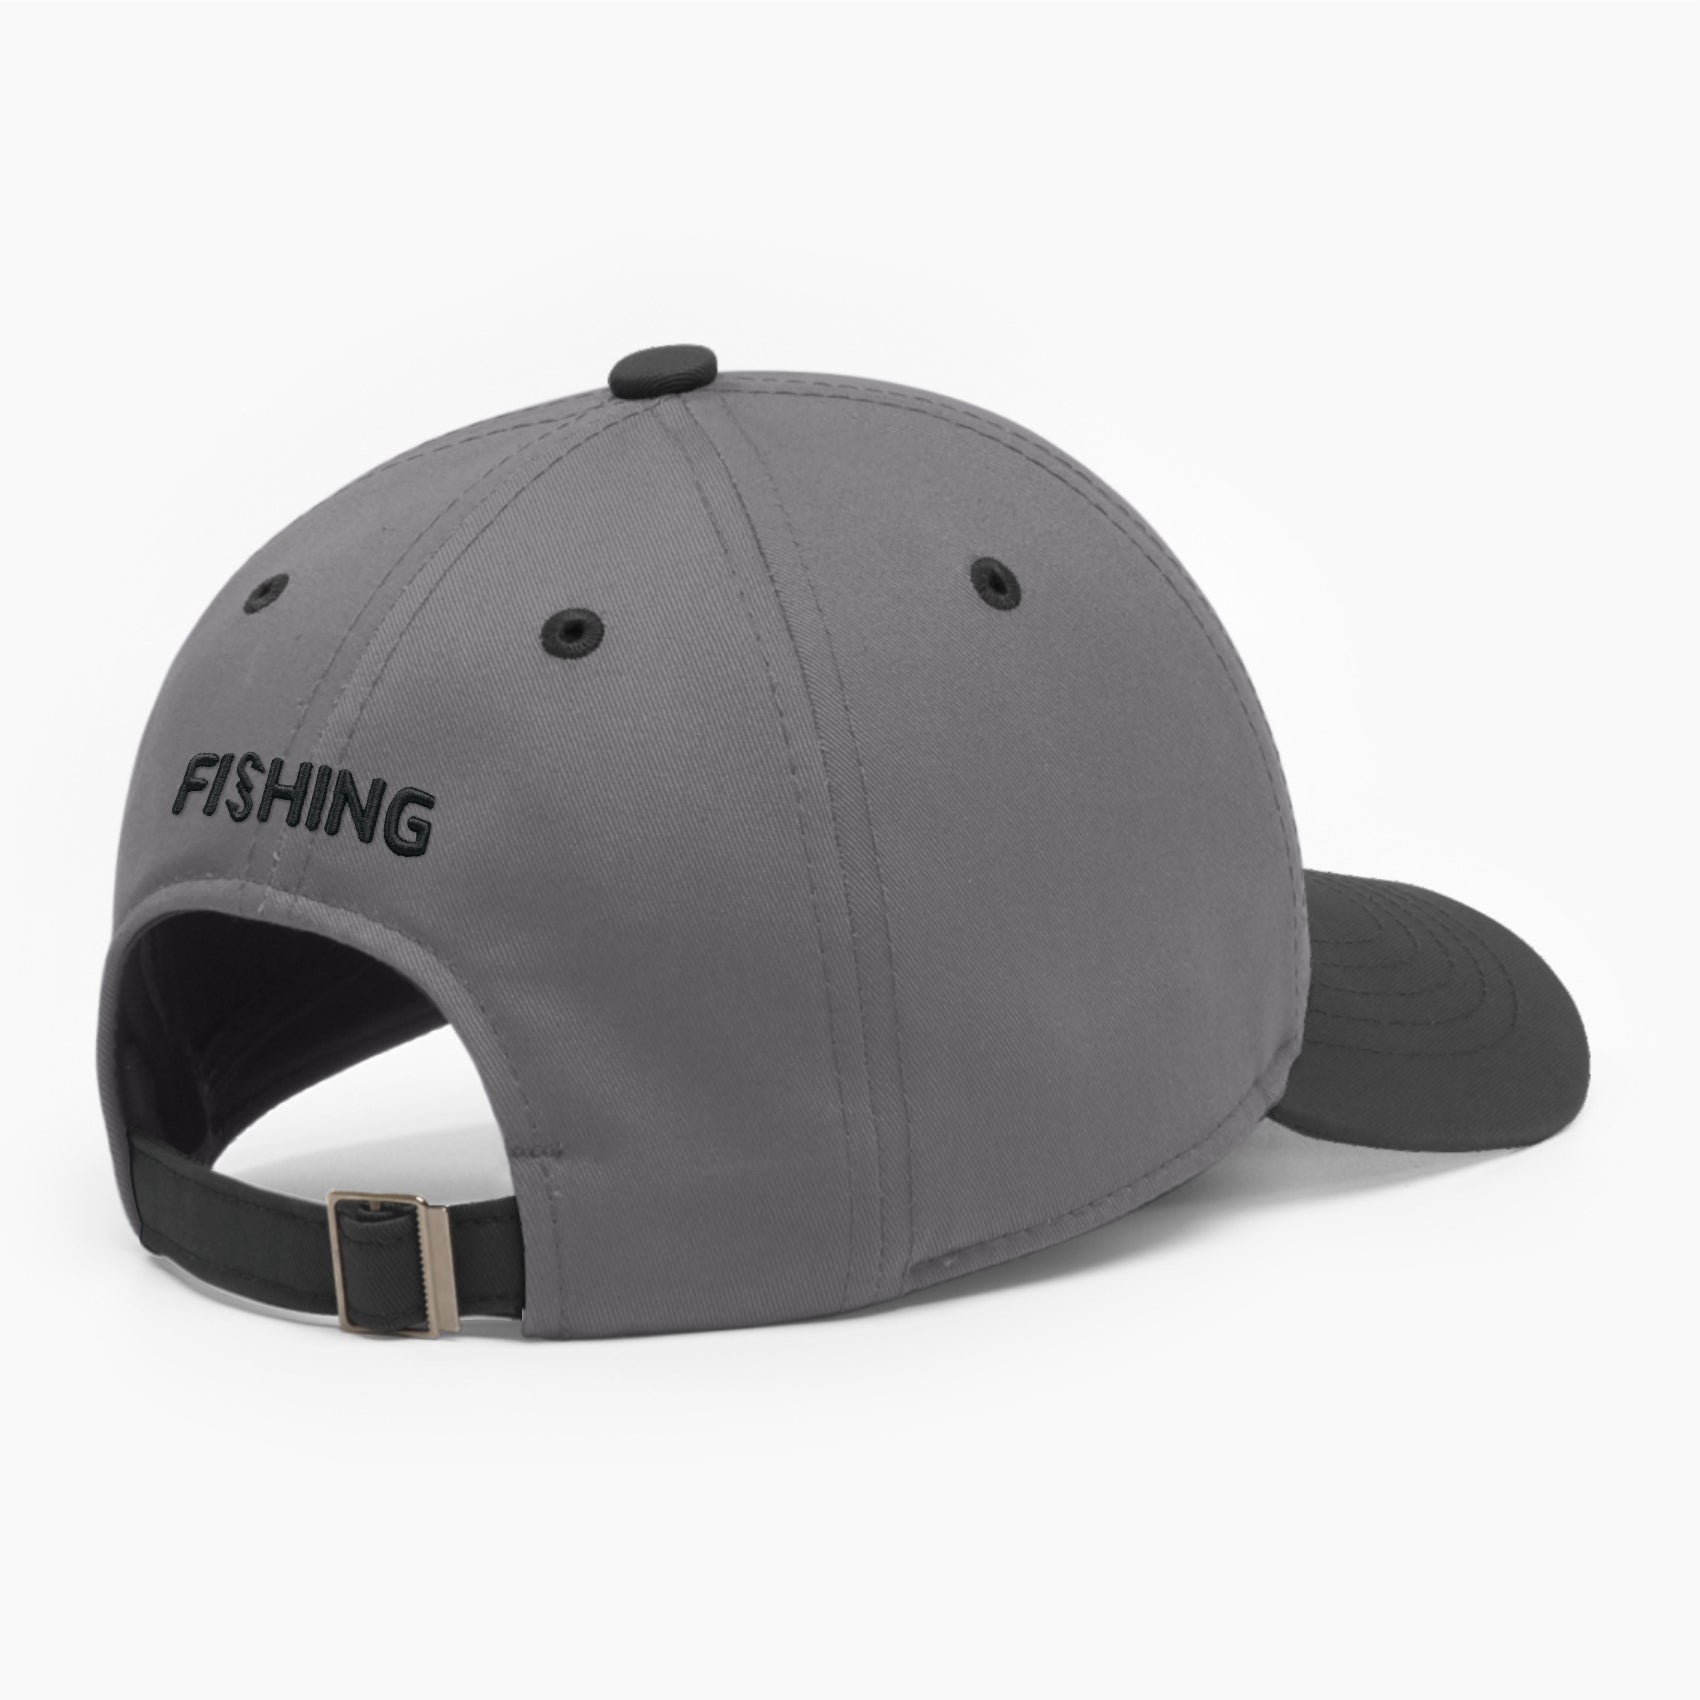 Fishing baseball hat